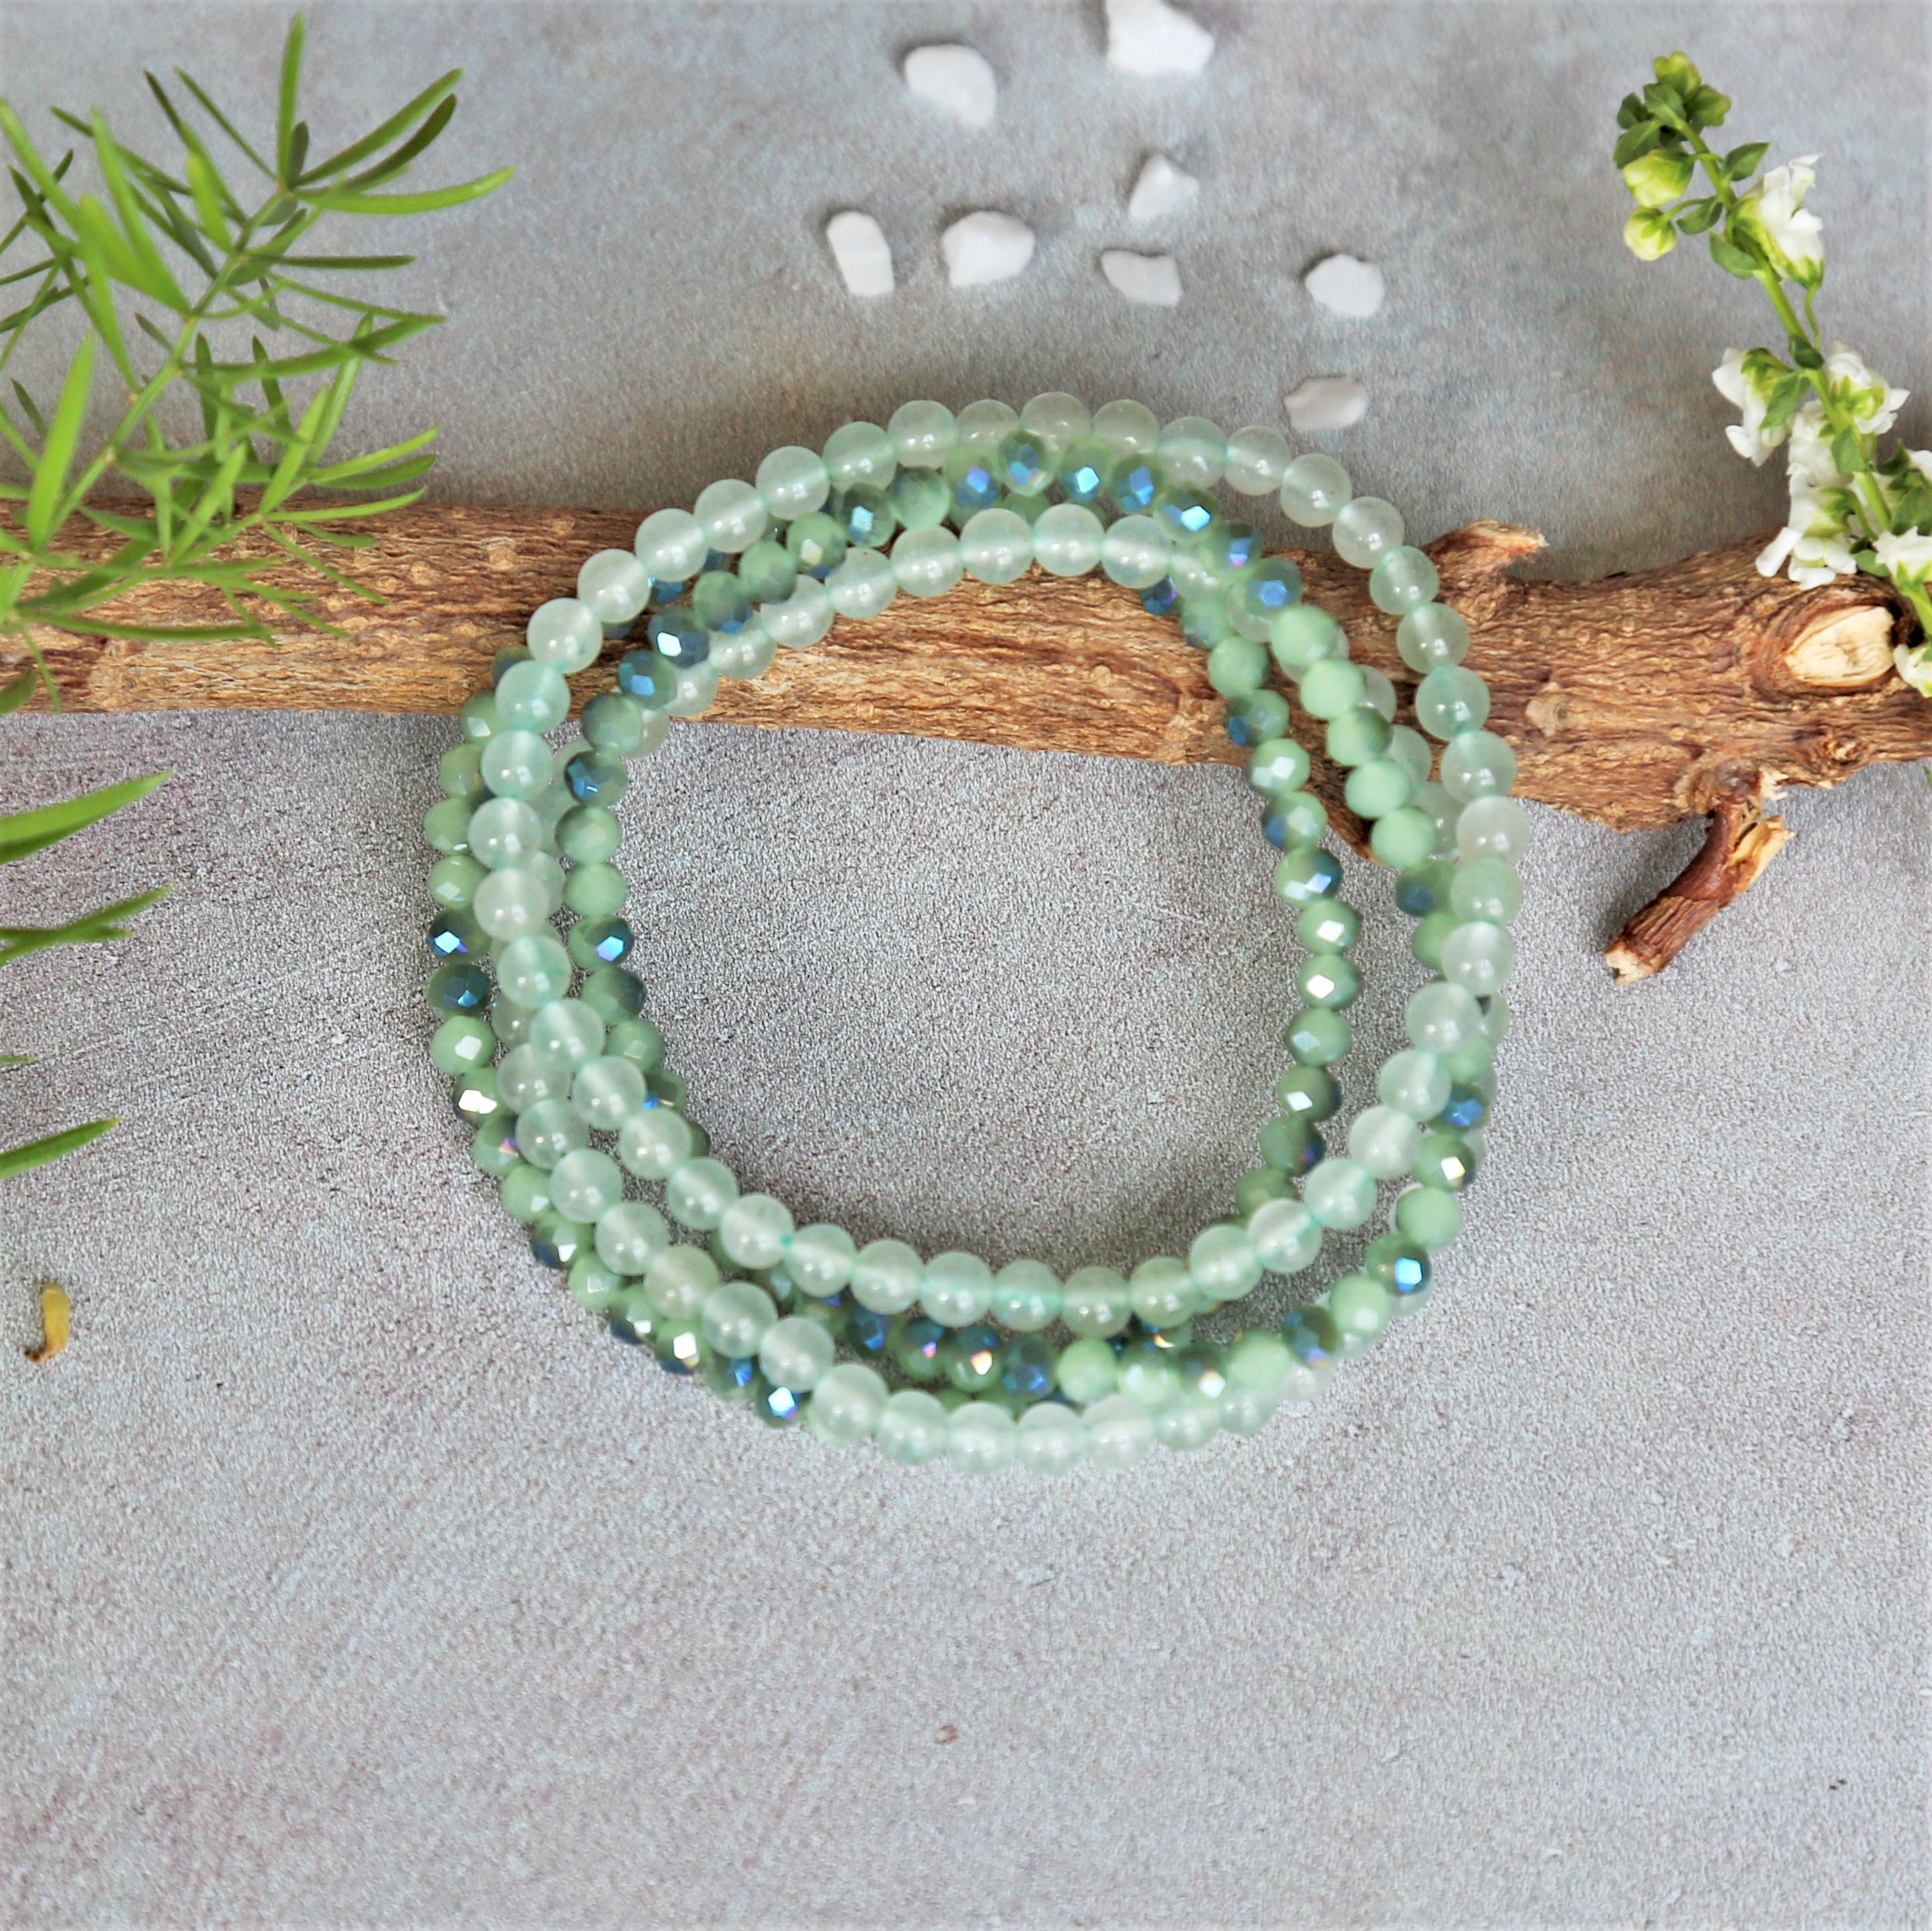 Shop Lava Bead Bracelet • The Green Crystal